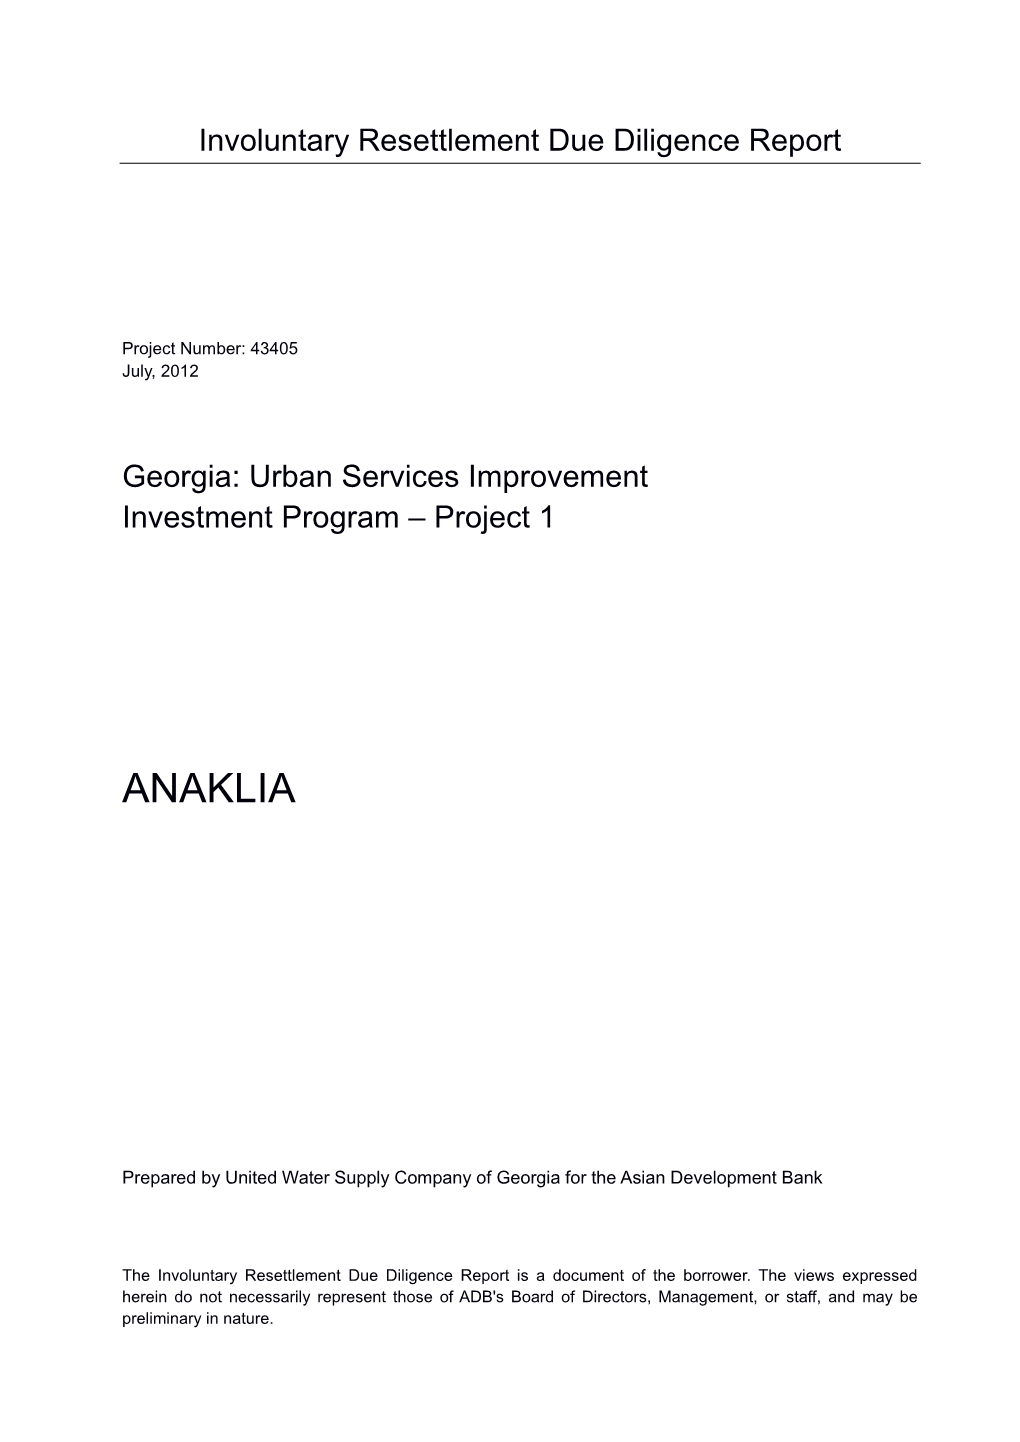 Georgia: Urban Services Improvement Investment Program – Project 1